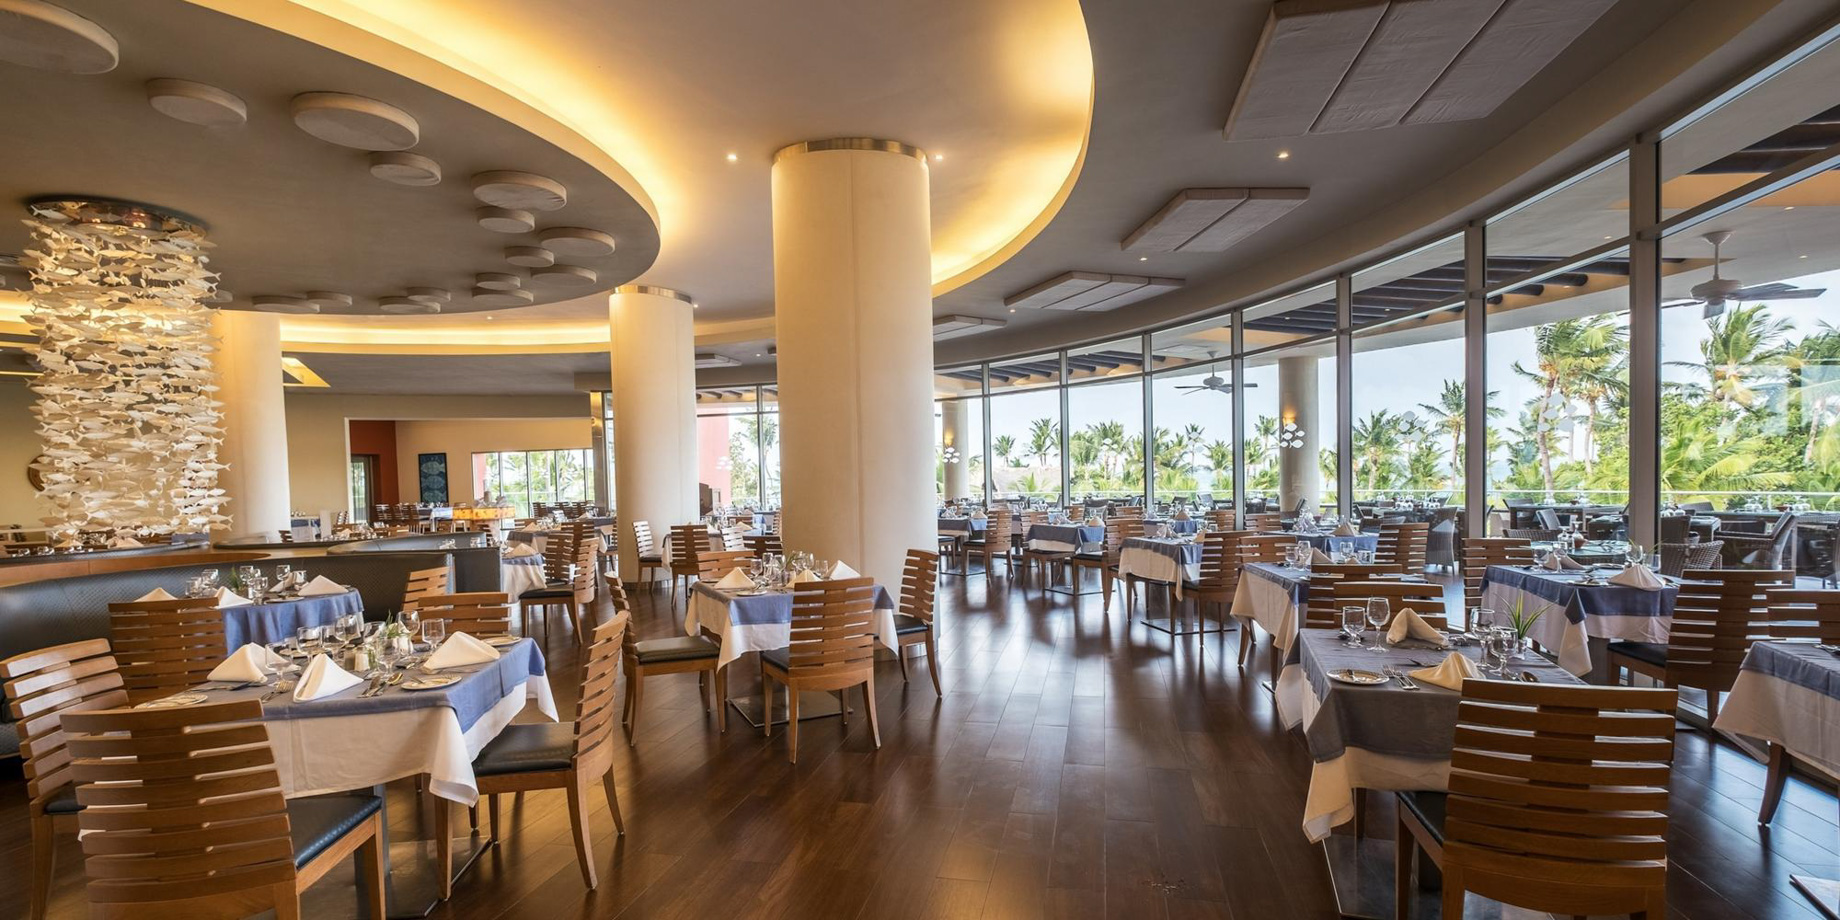 Barceló Bávaro Palace Hotel Grand Resort - Punta Cana, Dominican Republic - El Coral Restaurant